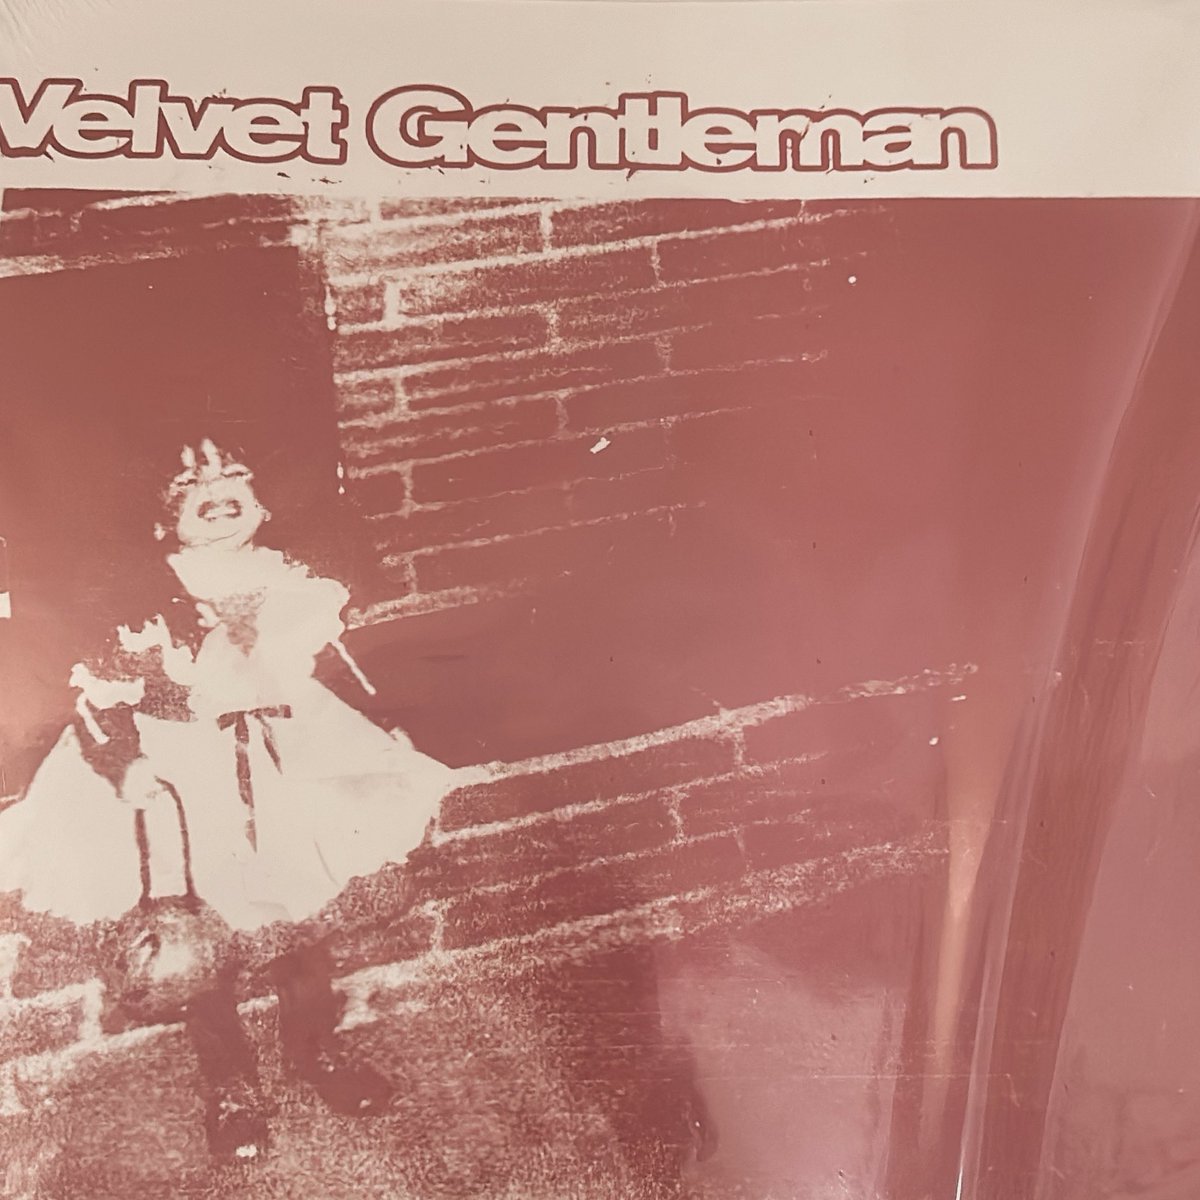 Another great album. I’m still loving my #savannah record finds from @graveface_recs ! #nowspinning #velvetgentlemanburn #joycity #listenwithme #ilovemucis #vinyl #vinylrecords